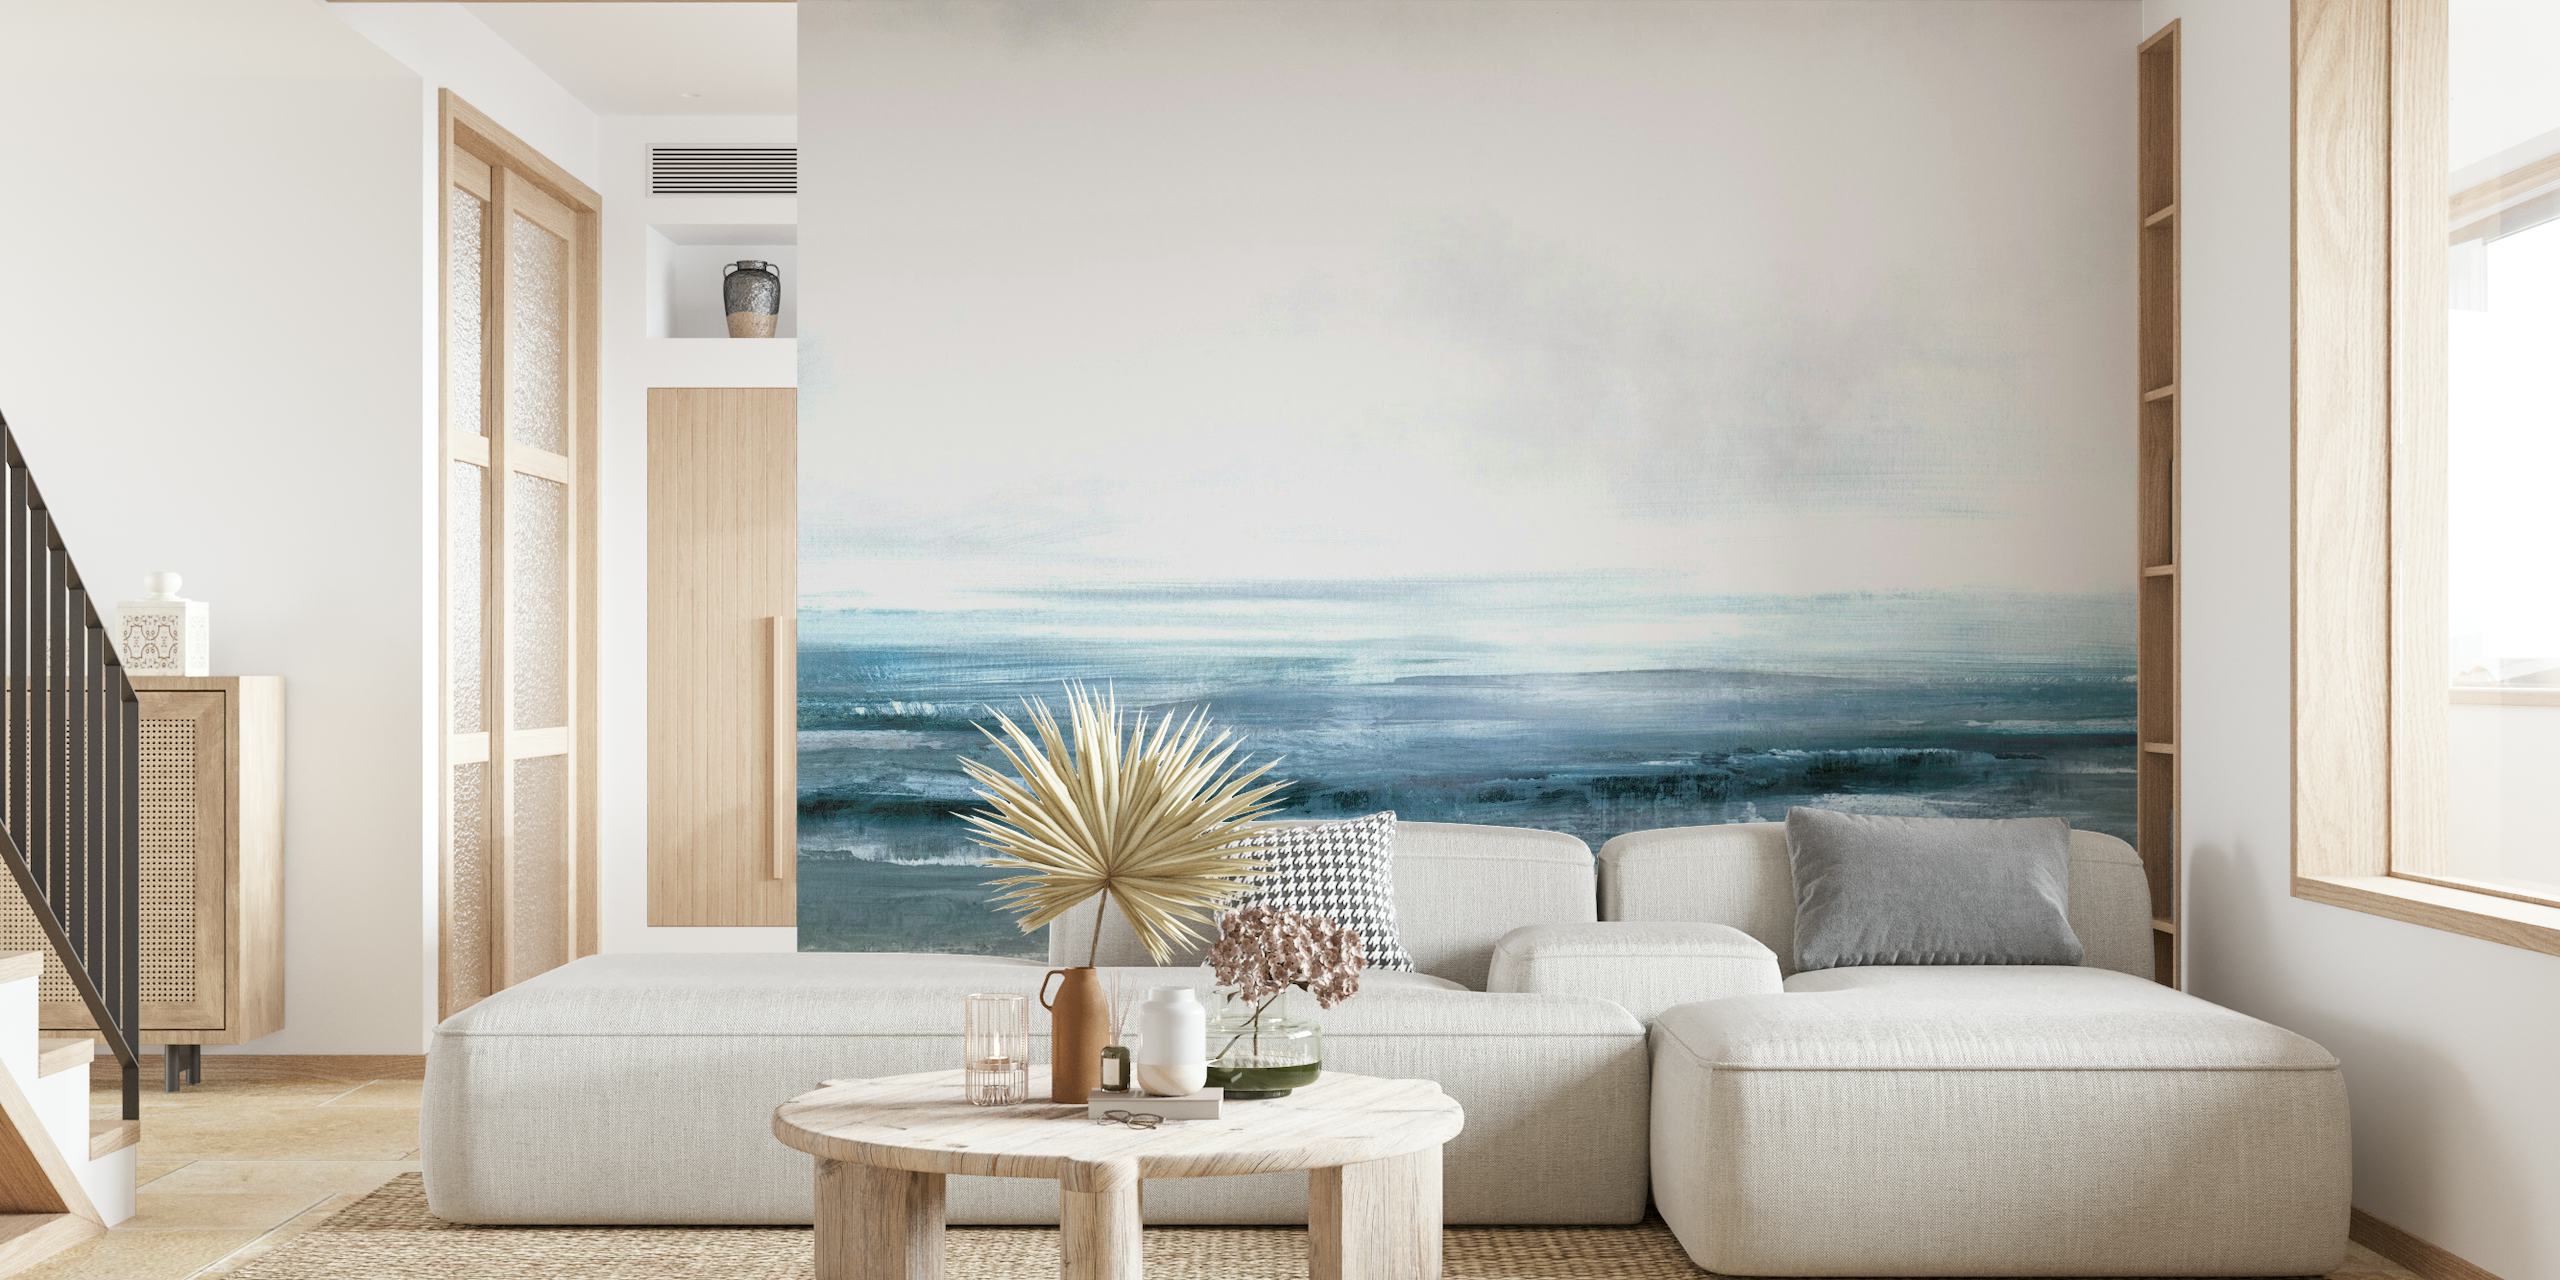 Fototapeta Klidný oceánský horizont s odstíny modré a šedé